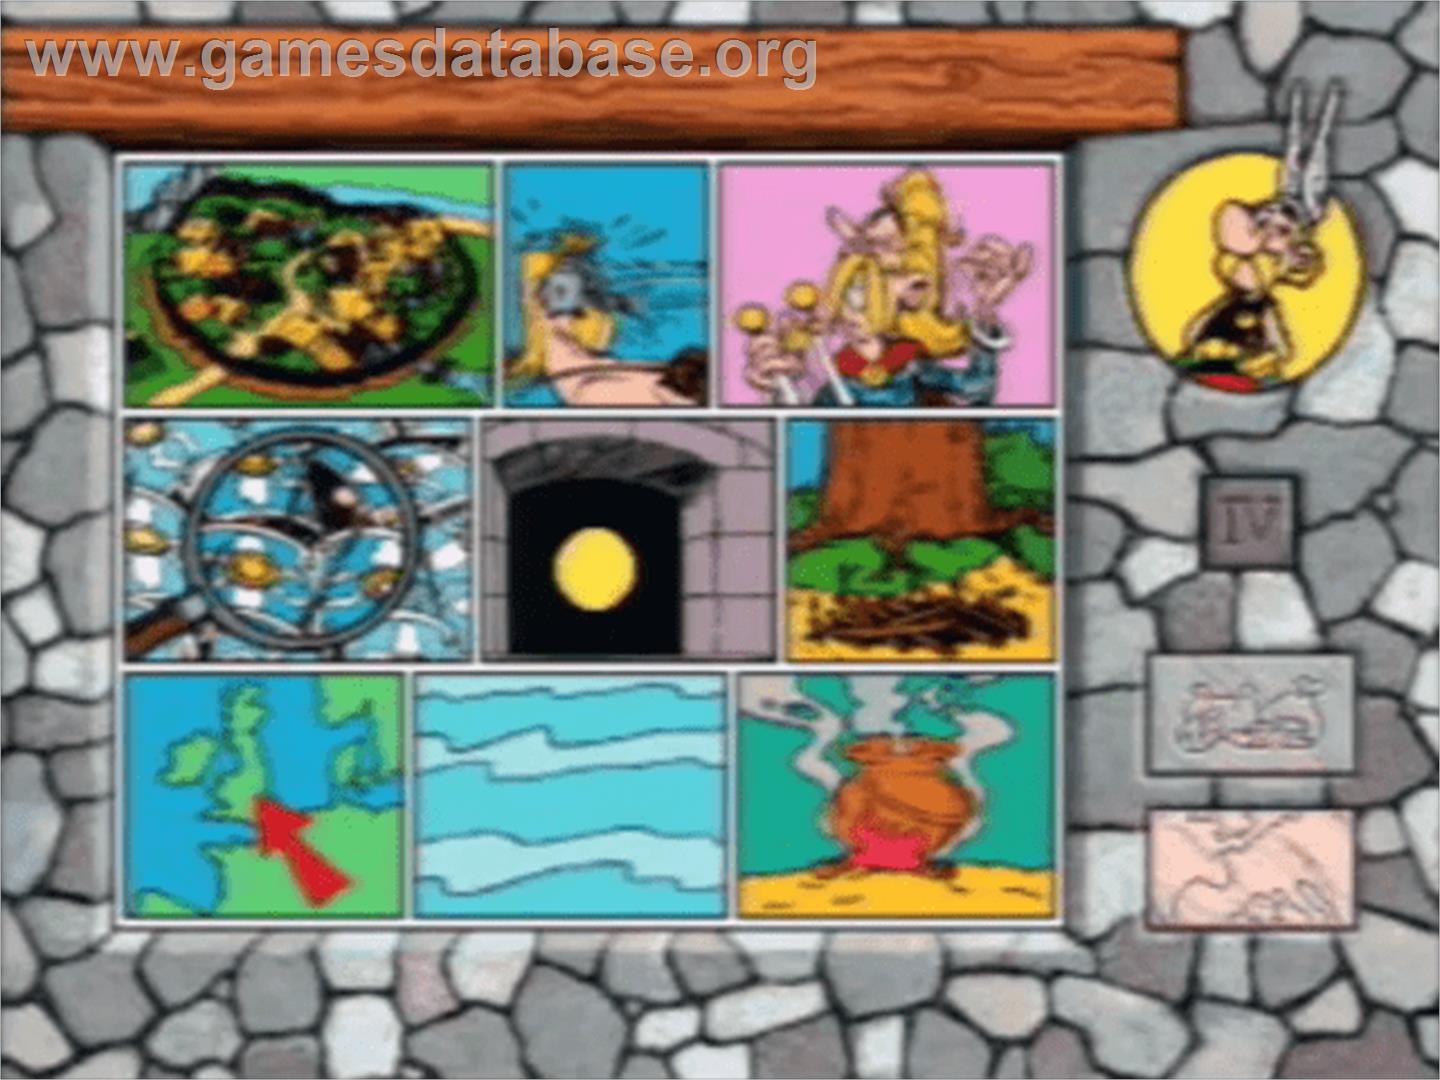 Asterix: Caesar's Challenge - Philips CD-i - Artwork - In Game